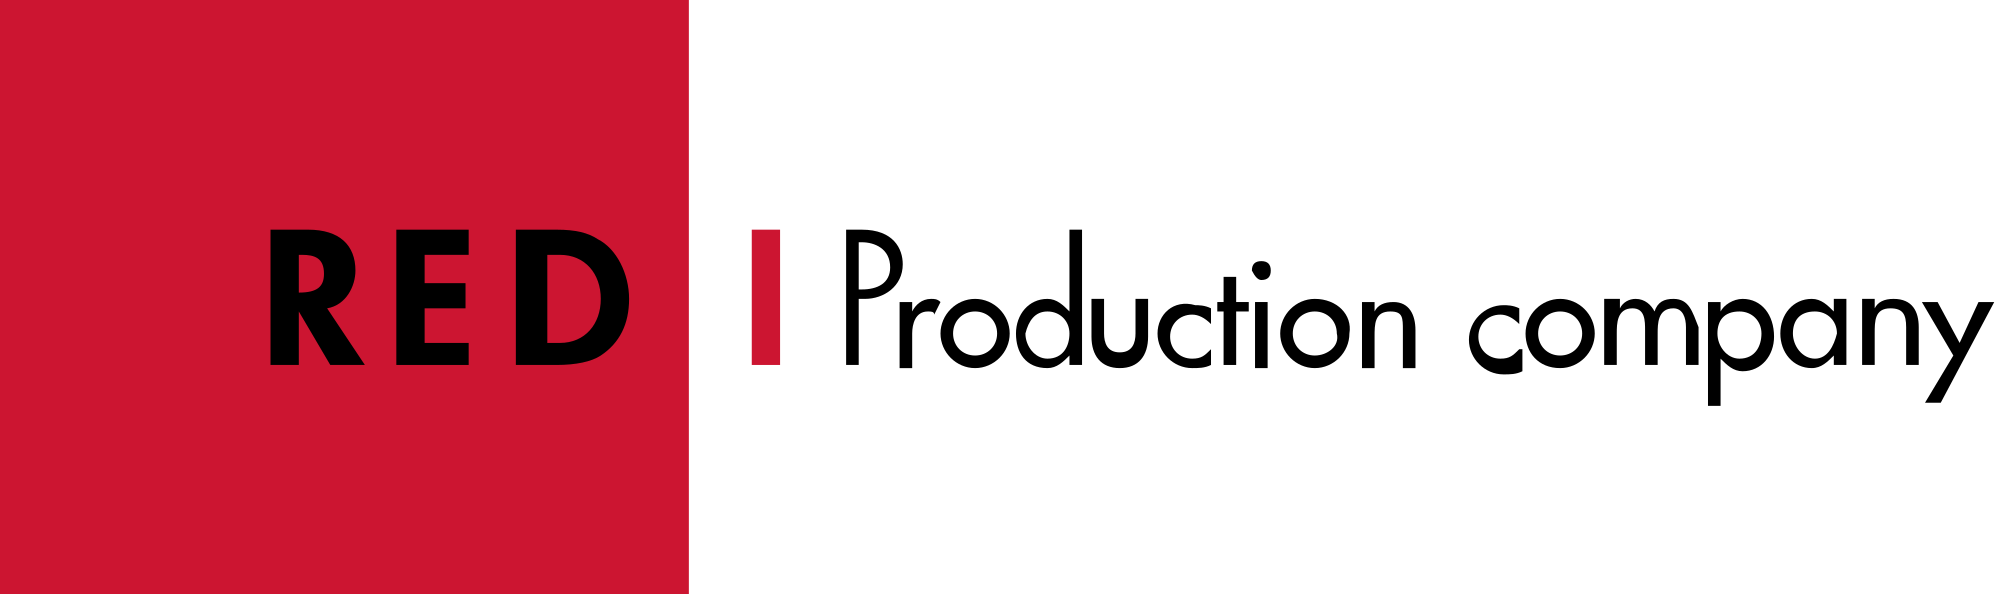 Red Production Company Logo